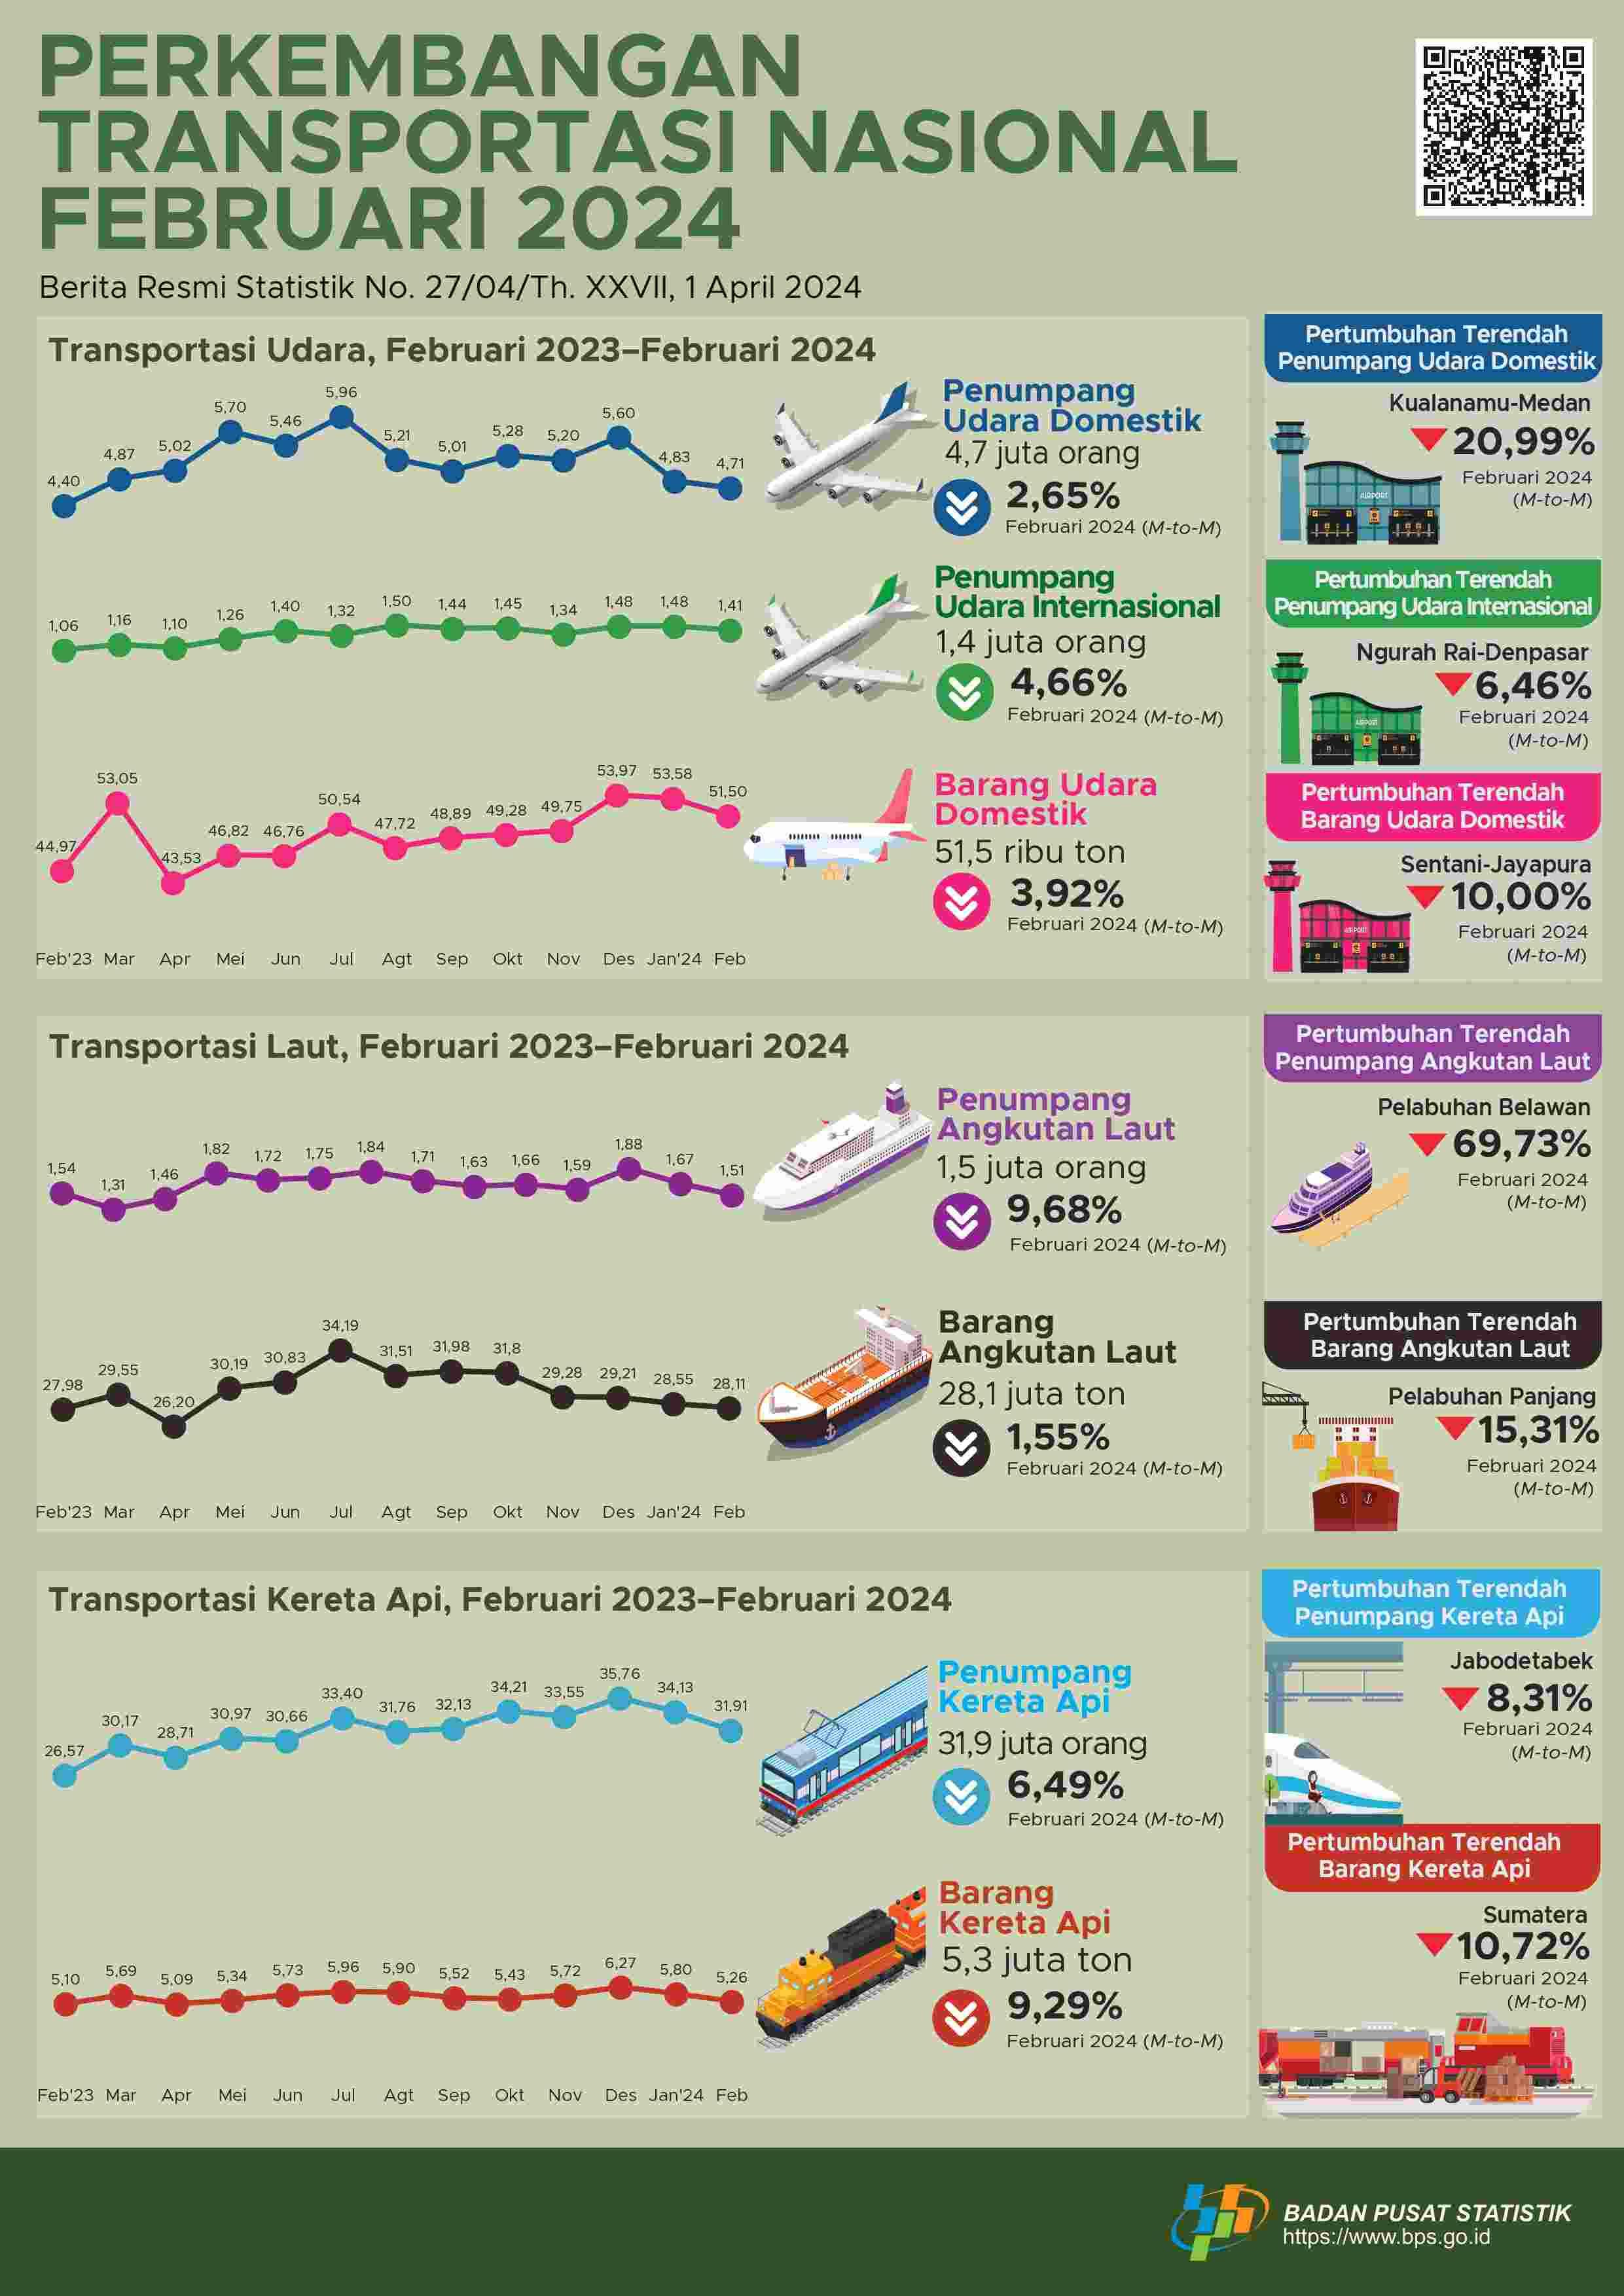 Selama Januari–Februari 2024, jumlah penumpang angkutan udara ke luar negeri naik 34,17 persen dibandingkan periode yang sama tahun sebelumnya.